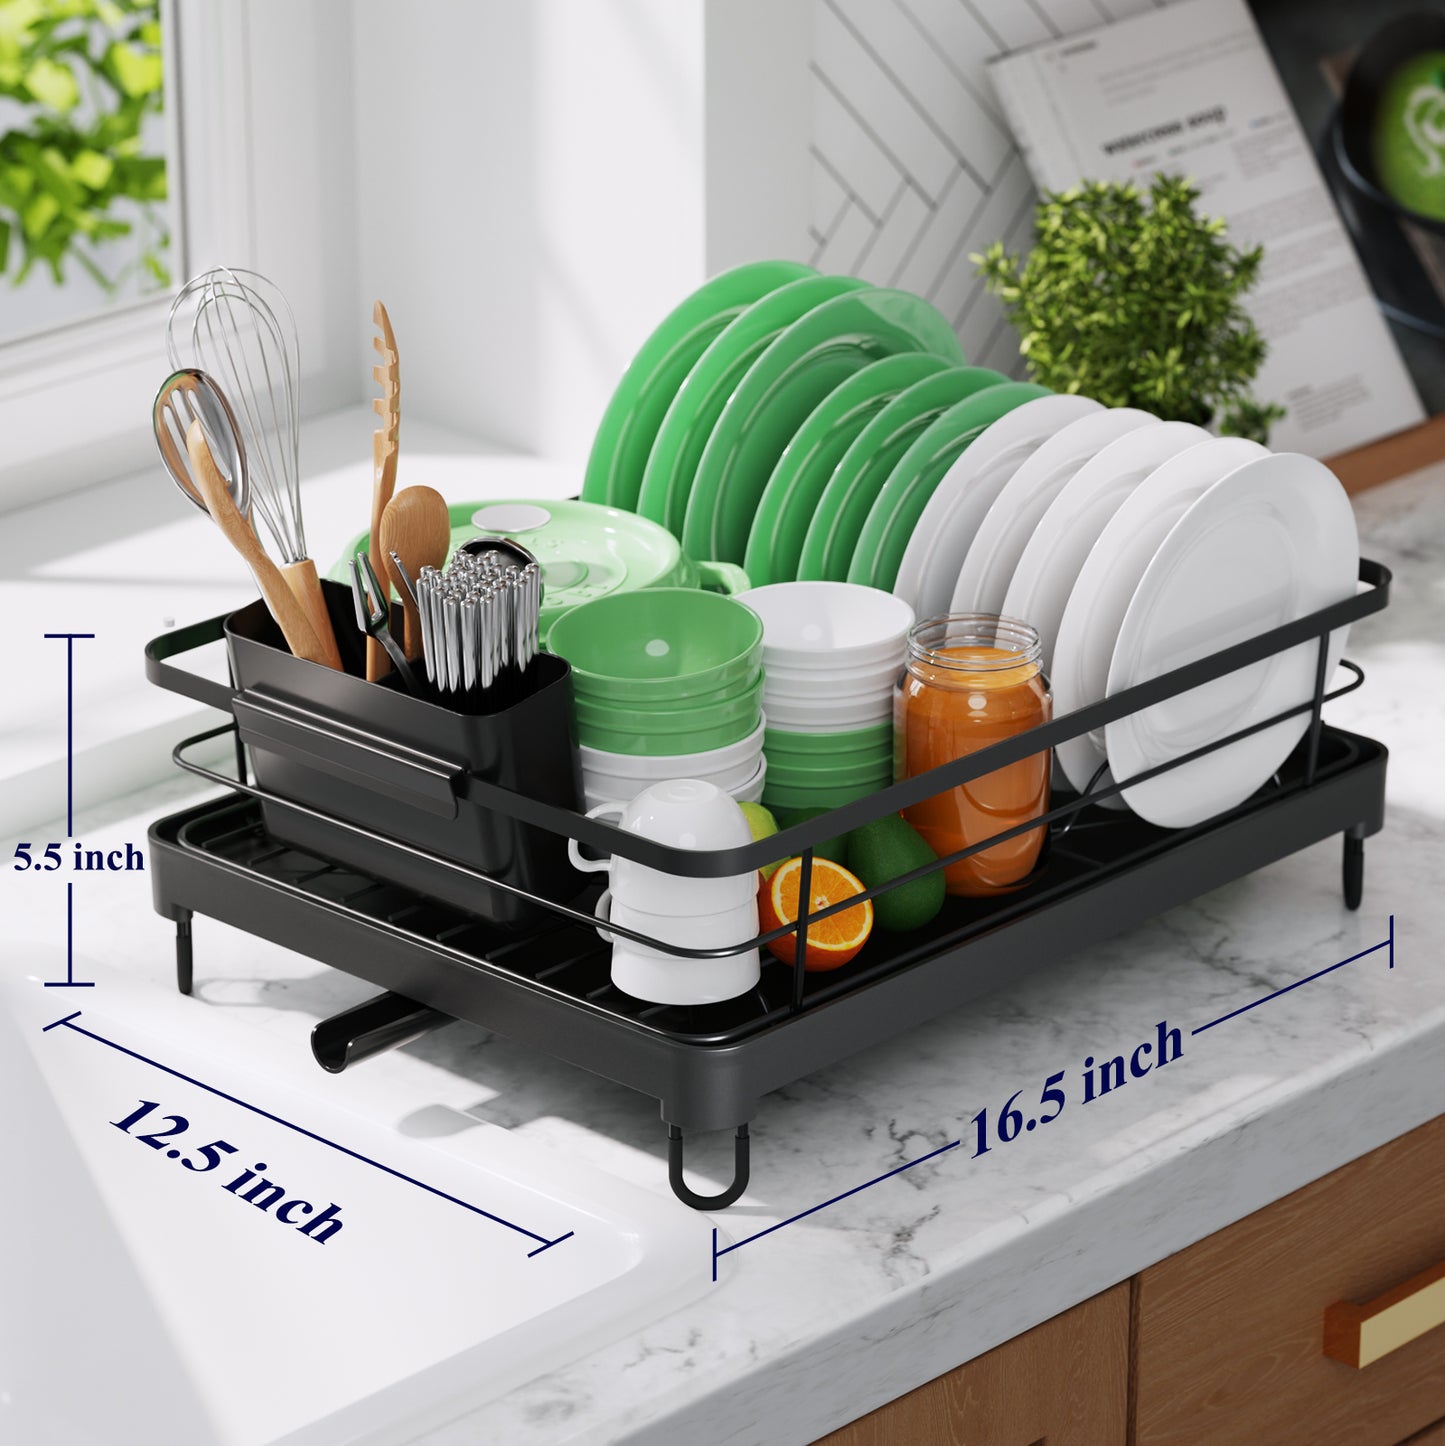 Kitsure Dish Drying Rack- Space-Saving Dish Rack, Dish Racks for Kitchen